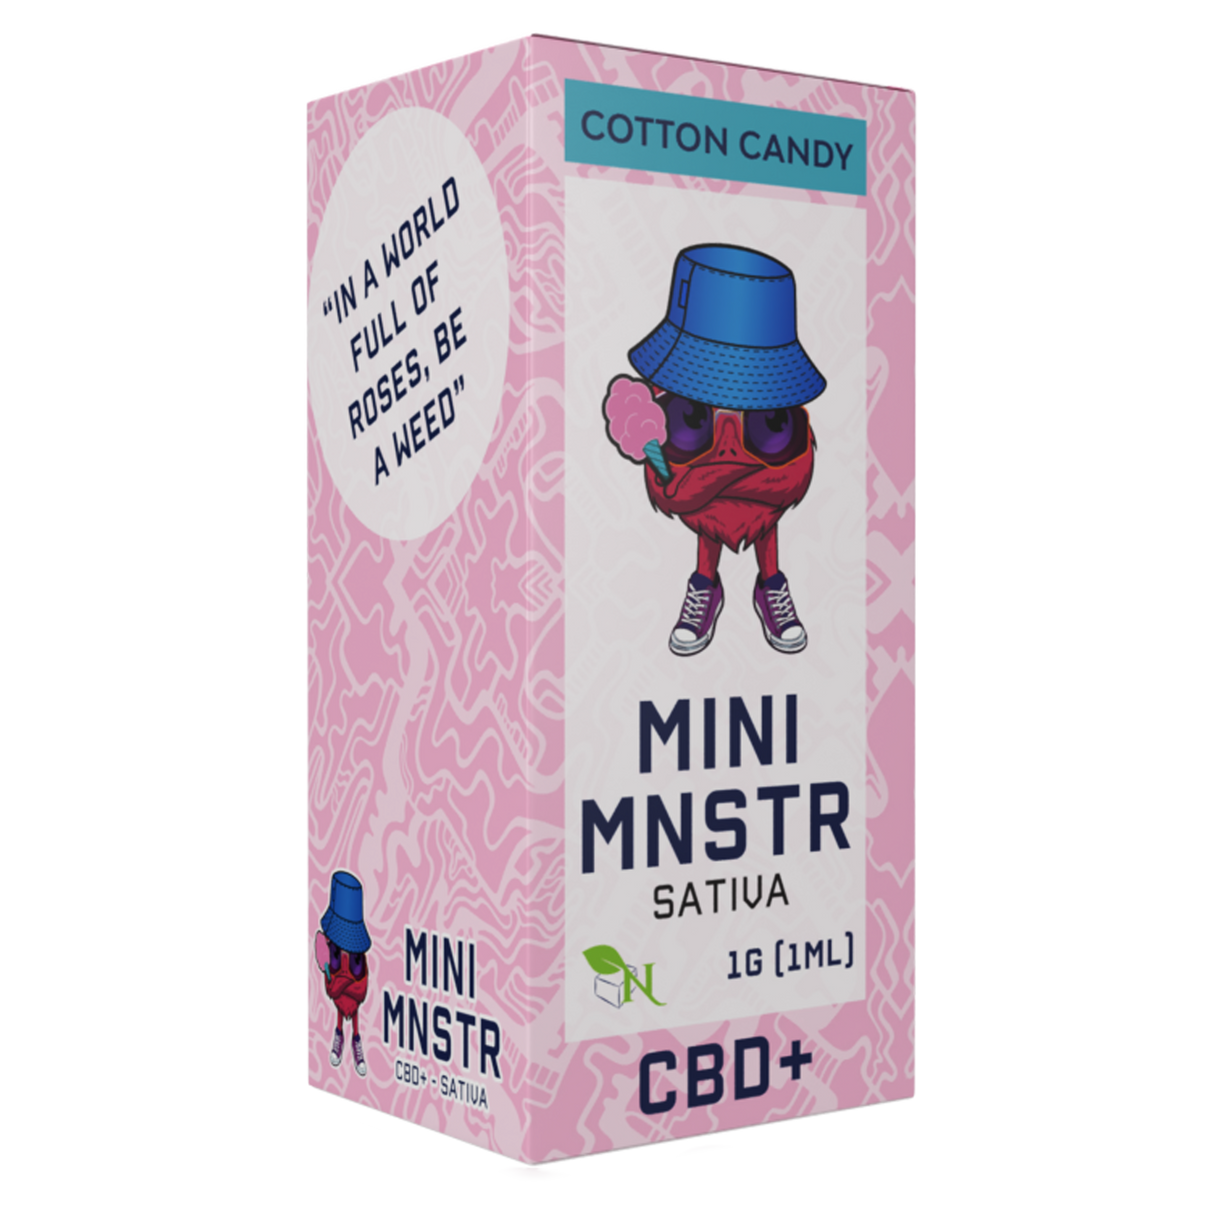 AGFN Mini Mnster 1 Gram Vape: CBD Cotton Candy (Sativa)